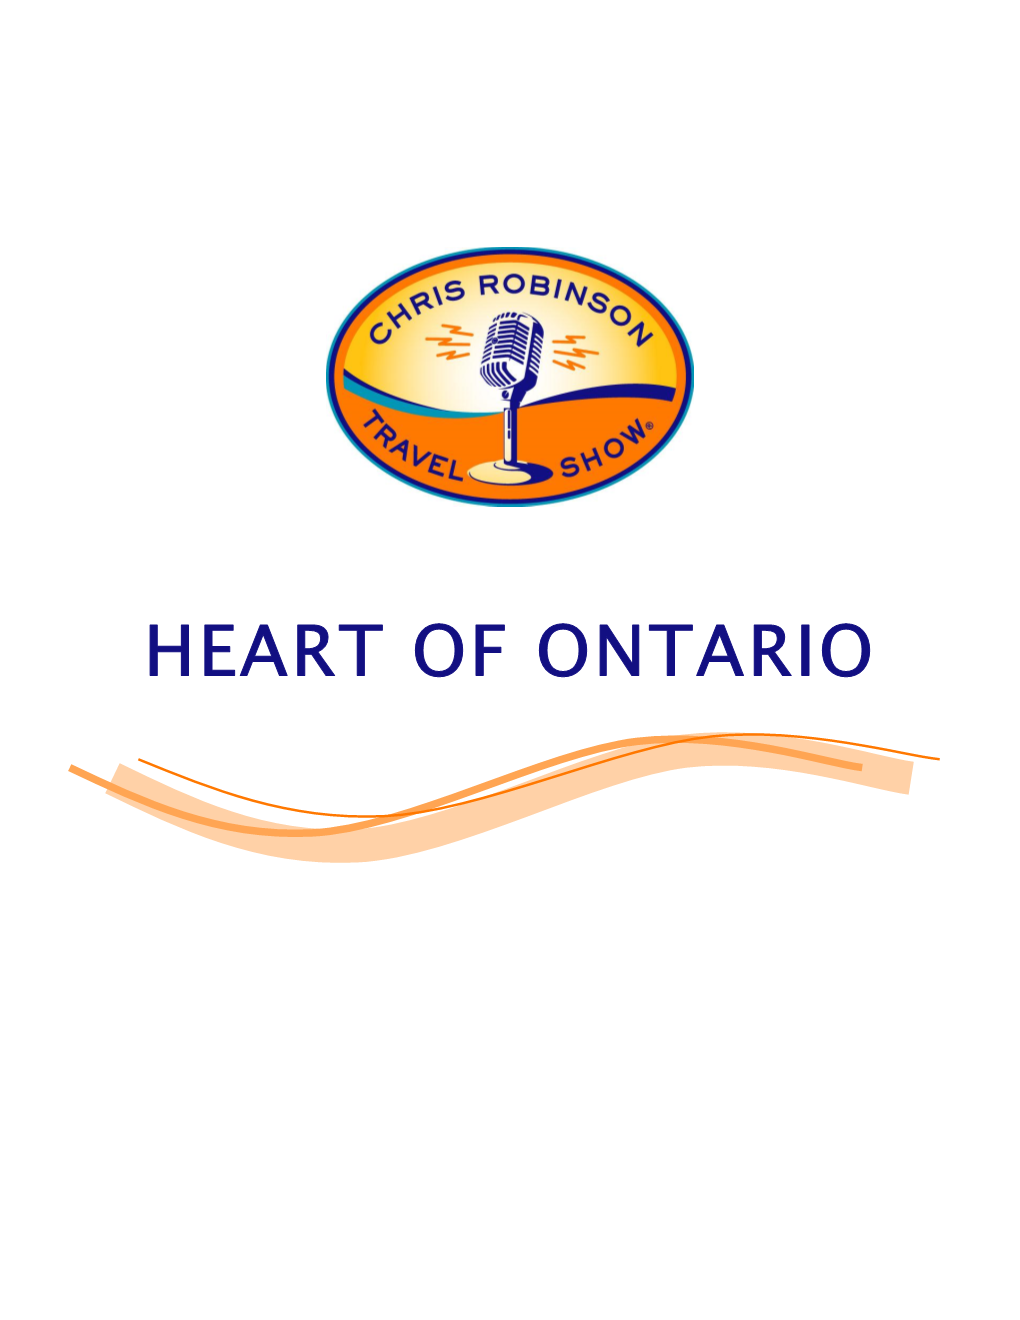 Heart of Ontario